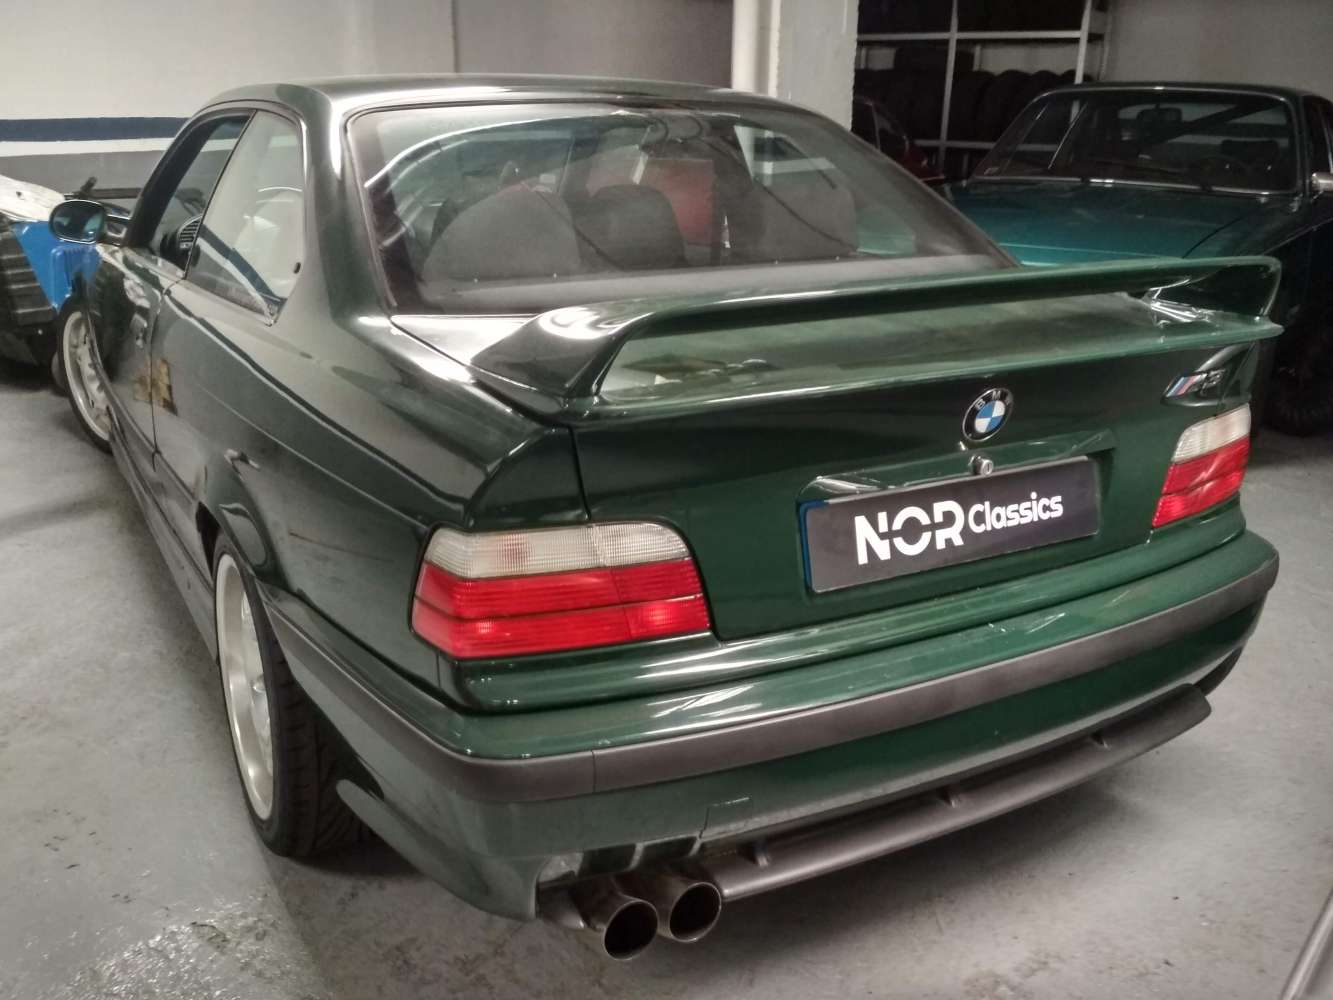 BMW E36 M3 GT 140,000 Kms Collection NorClassics